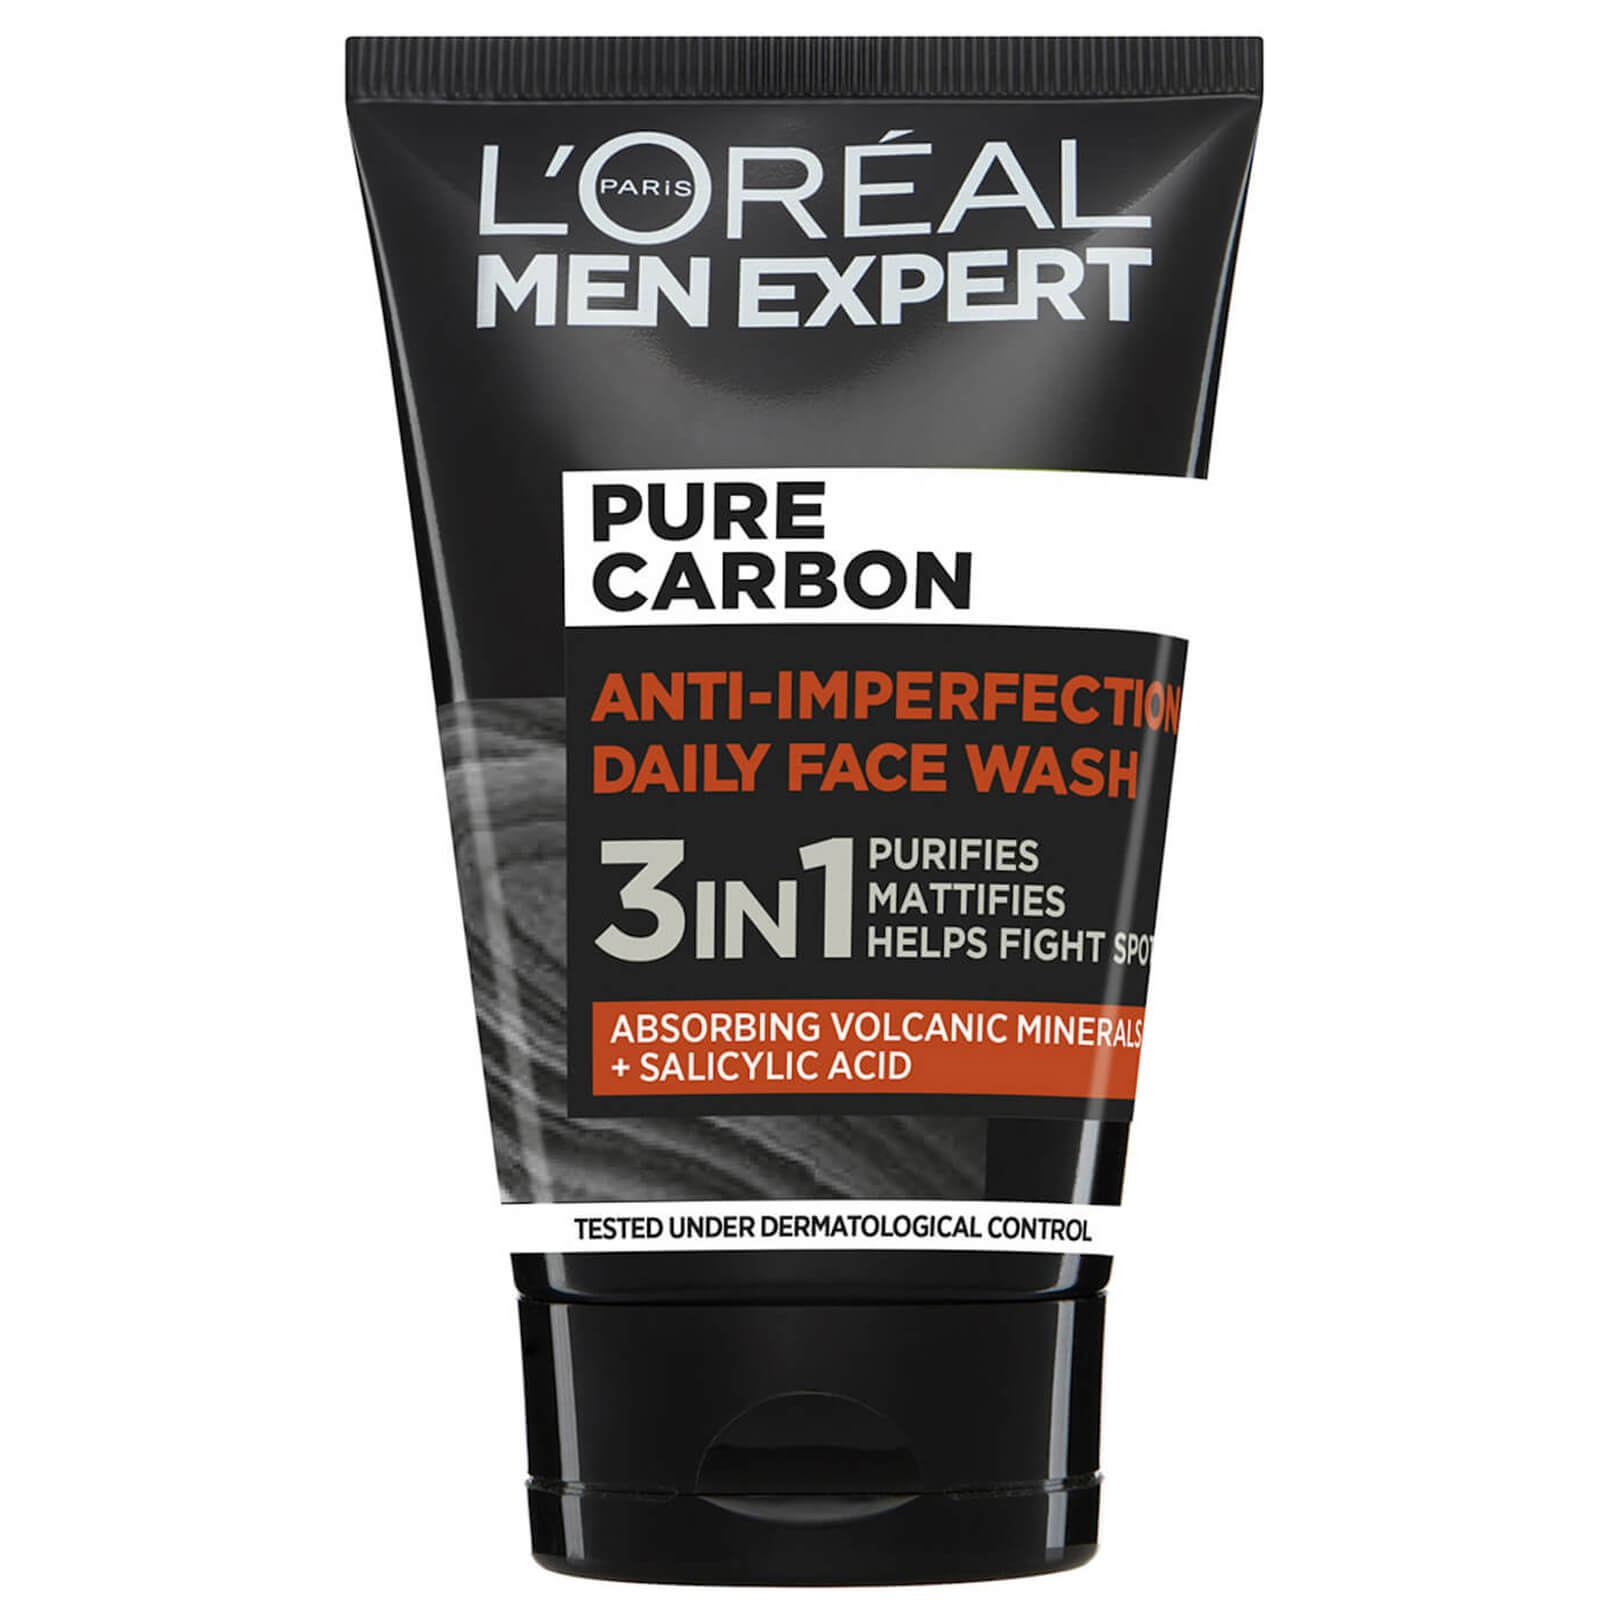 L'Oréal Paris Men Expert Carbono Puro 3 en 1 Lavado Facial Diario 100ml